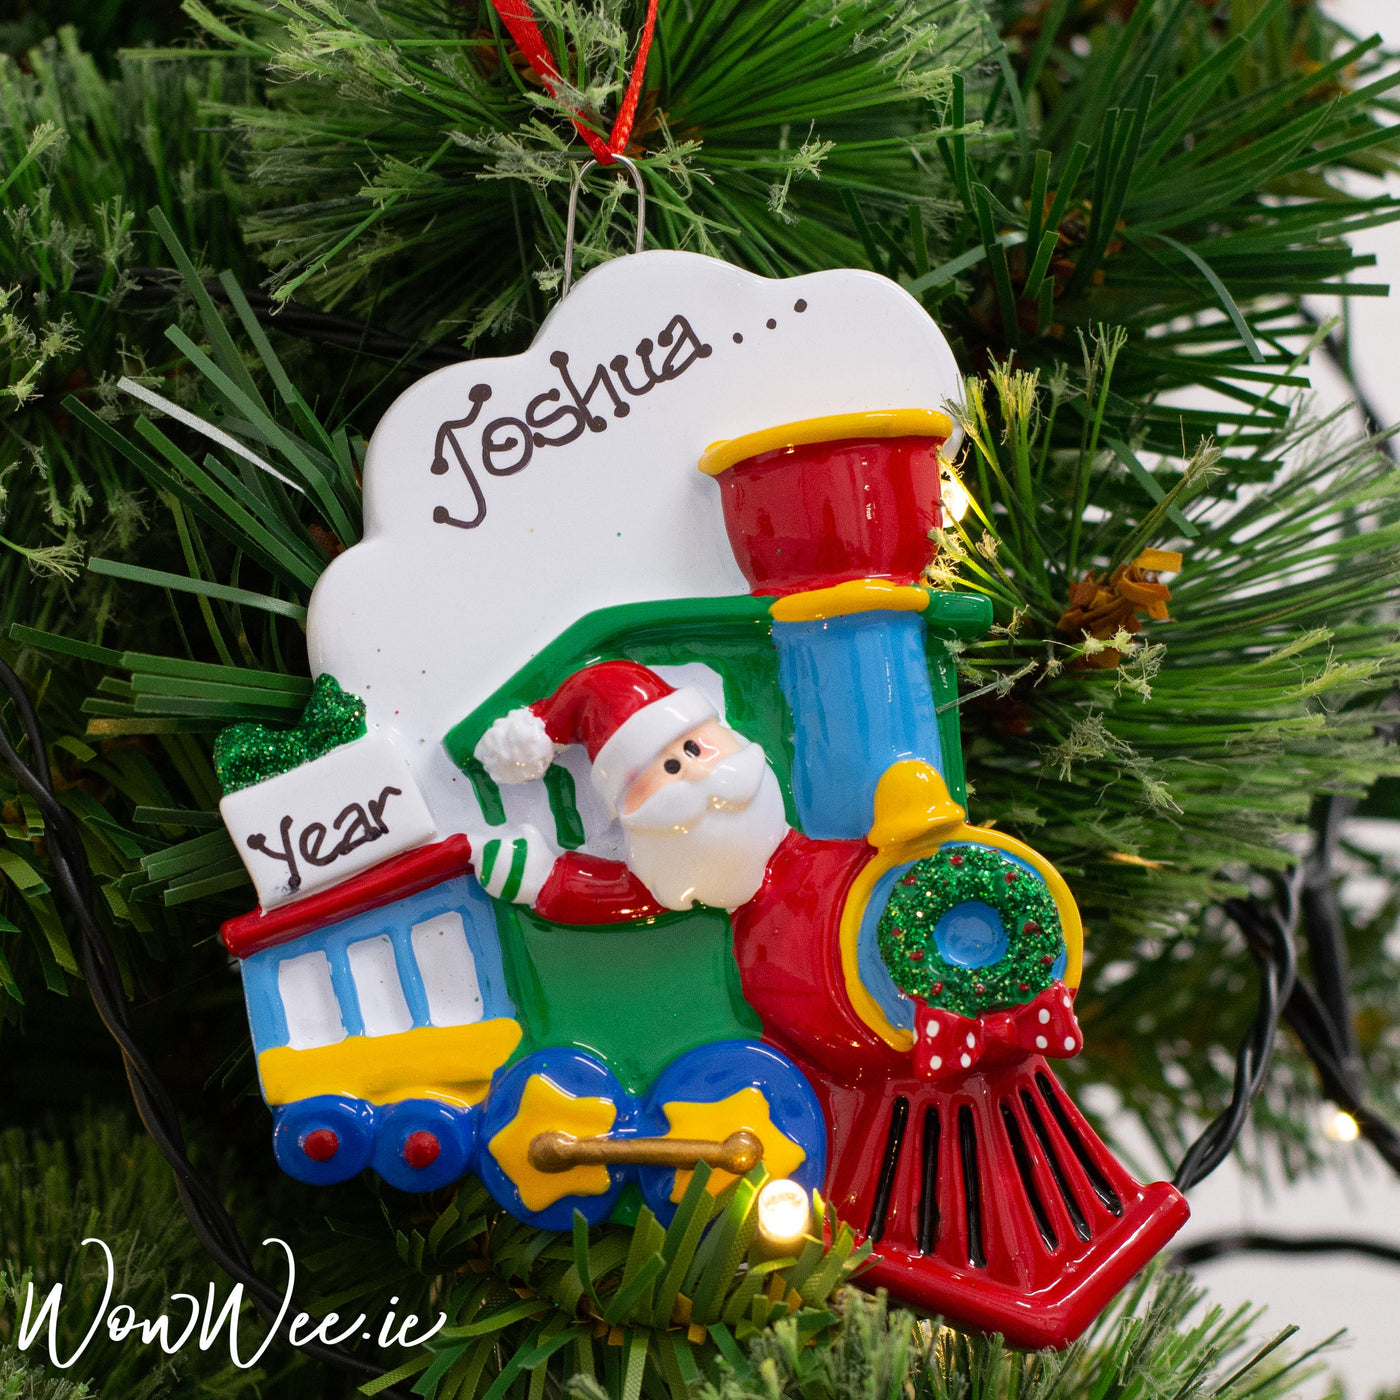 Personalised Christmas Ornament - Santa Train - WowWee.ie Personalised Gifts